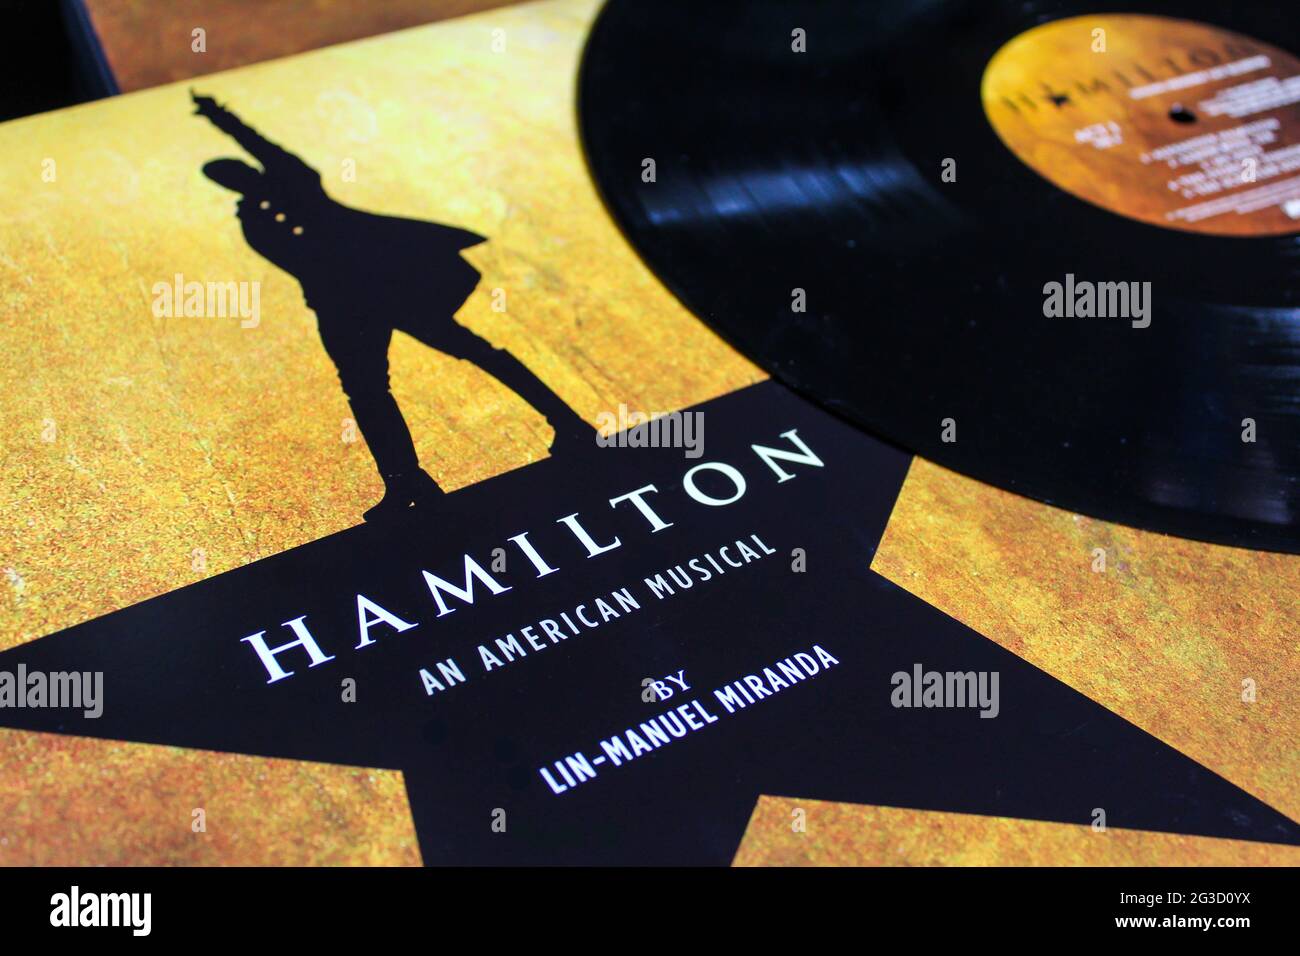 Hamilton Musical Original Broadway Cast Recording Vinyl Record LP disc by Lin Manuel Miranda Album cover Stock Photo